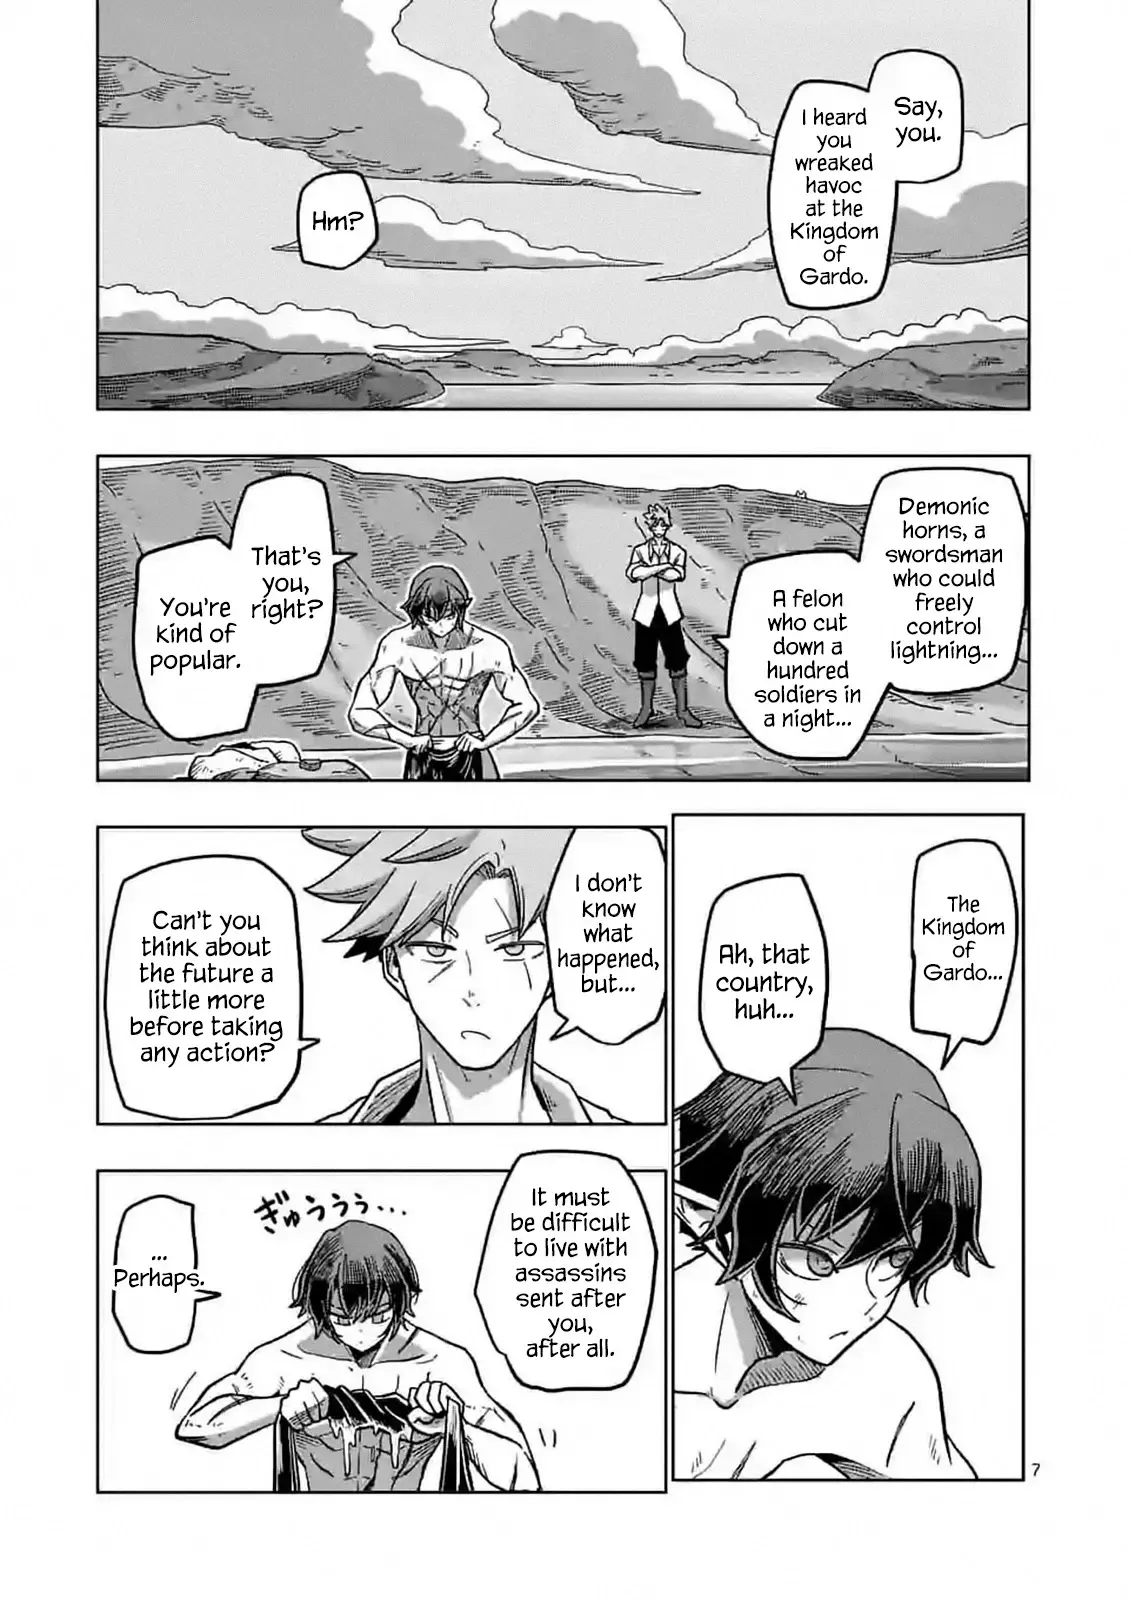 Verndio - Surreal Sword Saga - 5 page 7